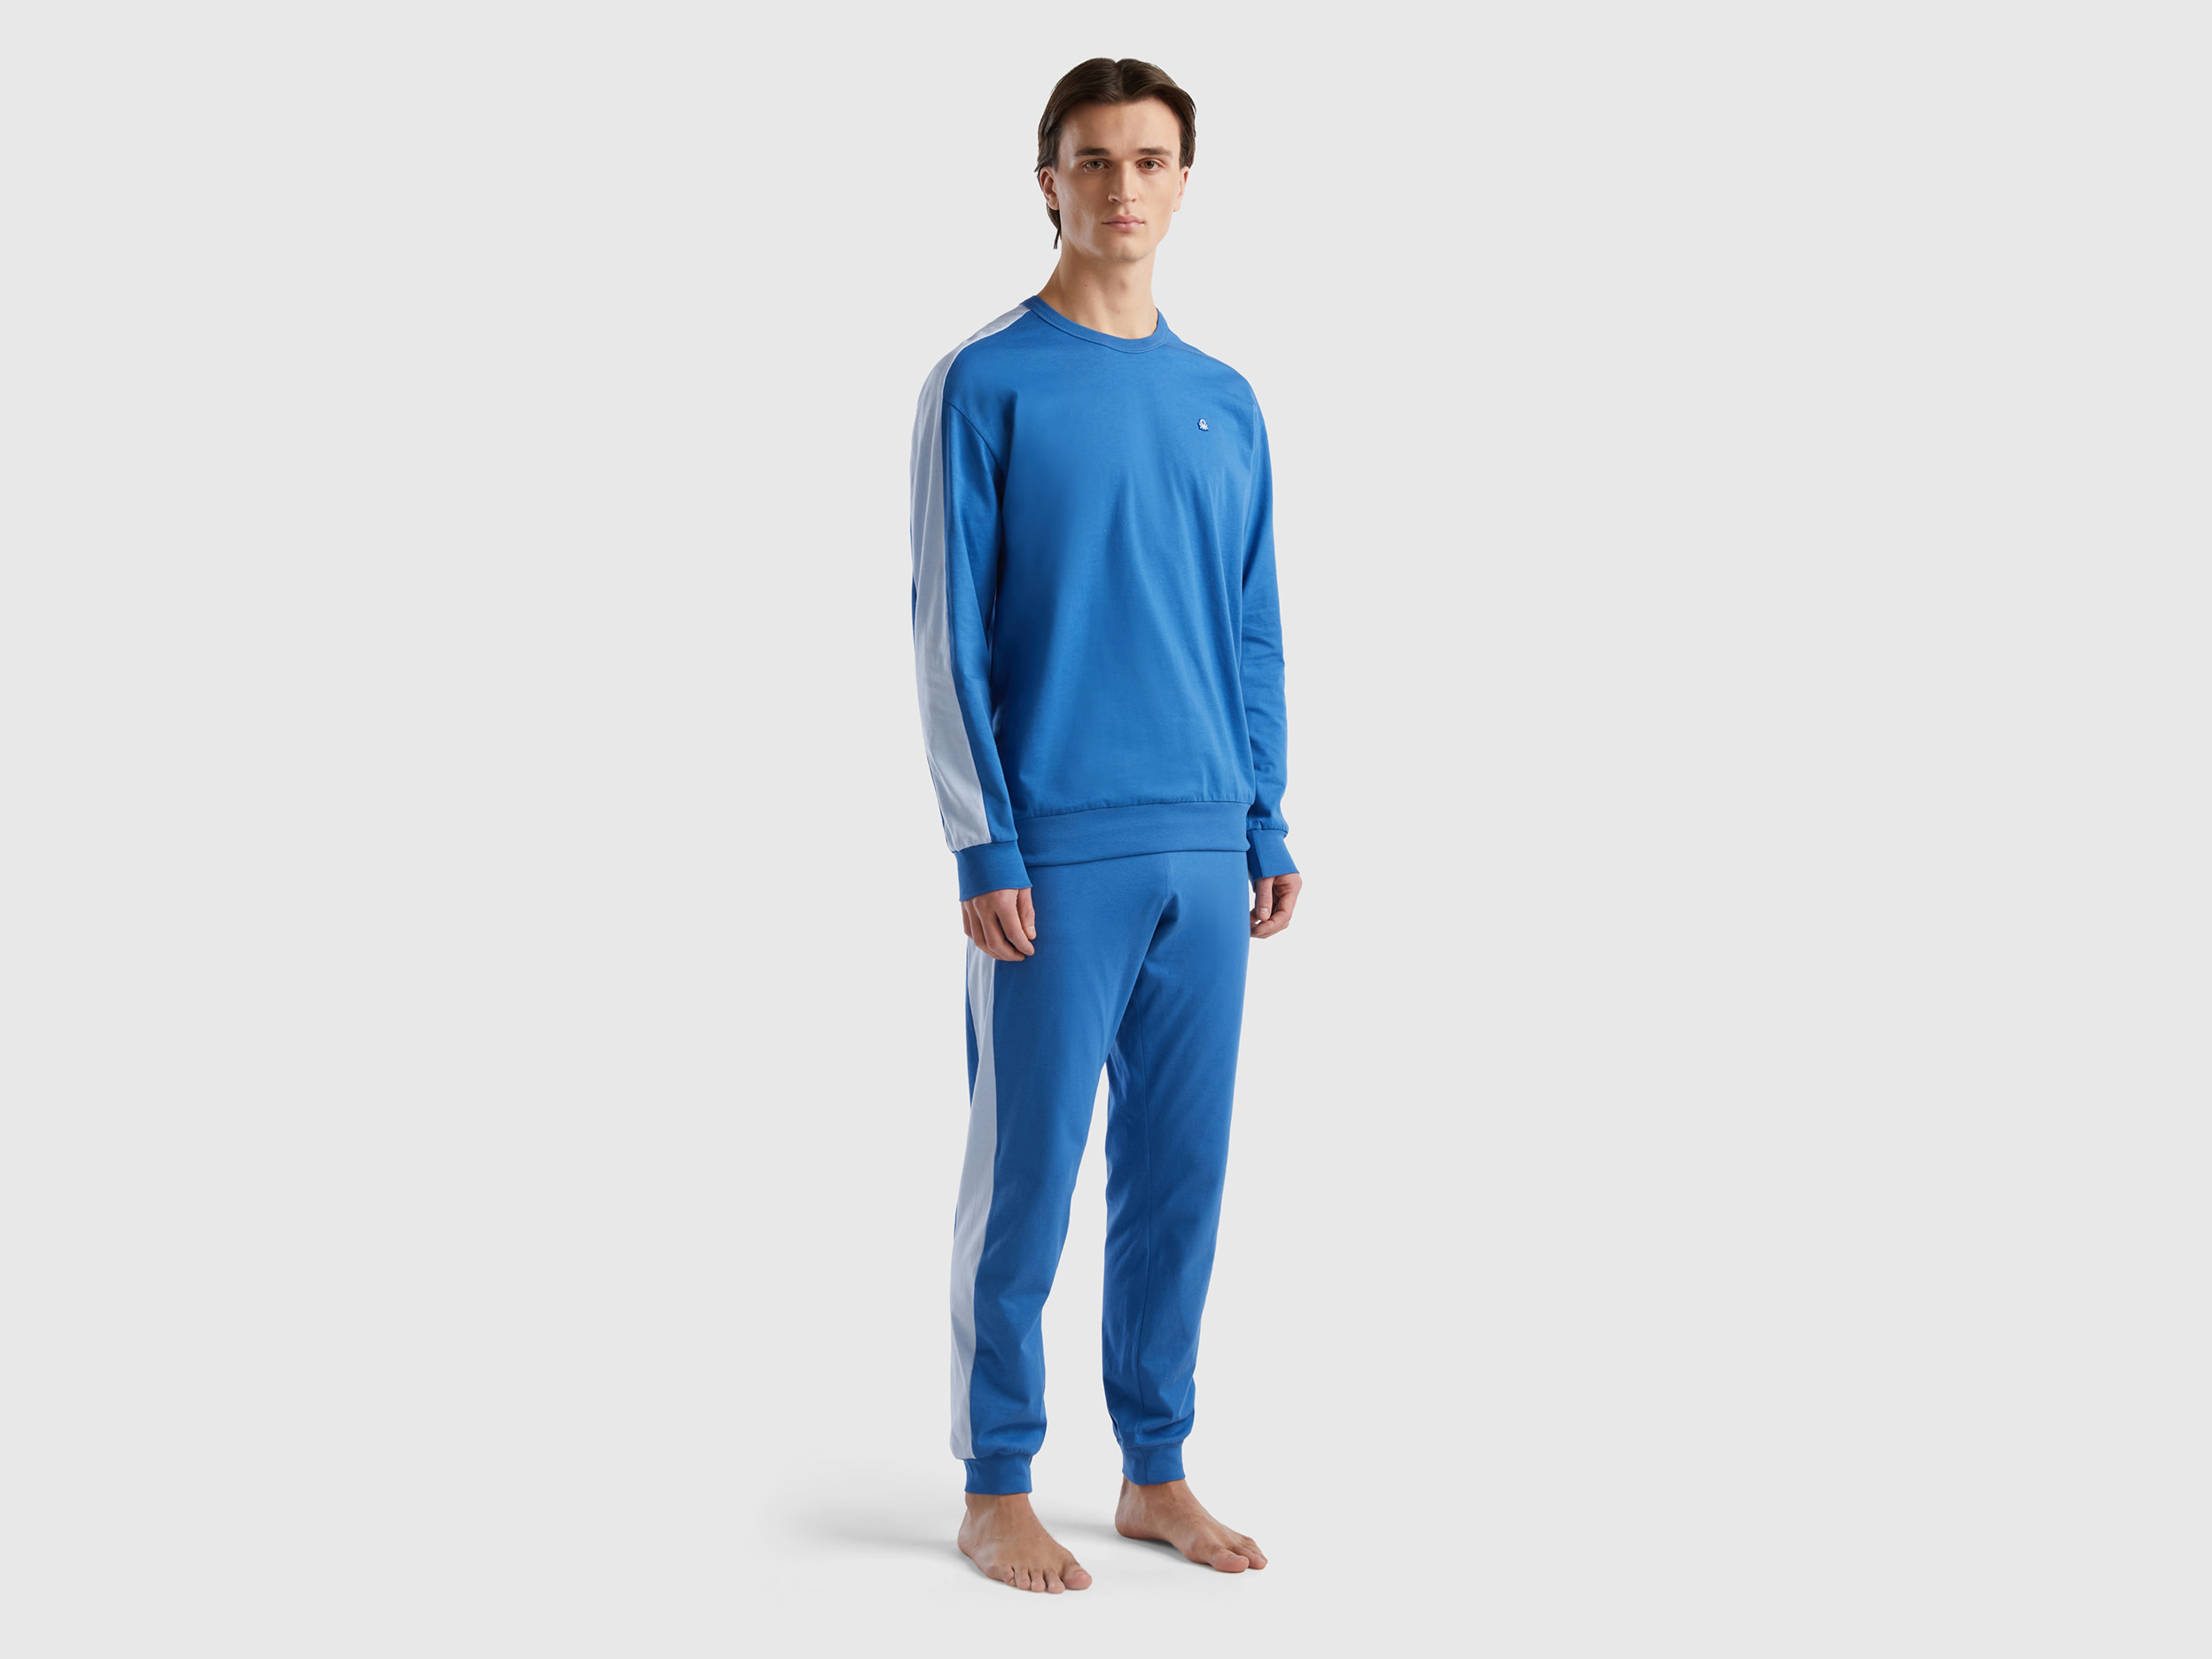 Benetton, Pyjamas With Side Stripes, size M, Blue, Men